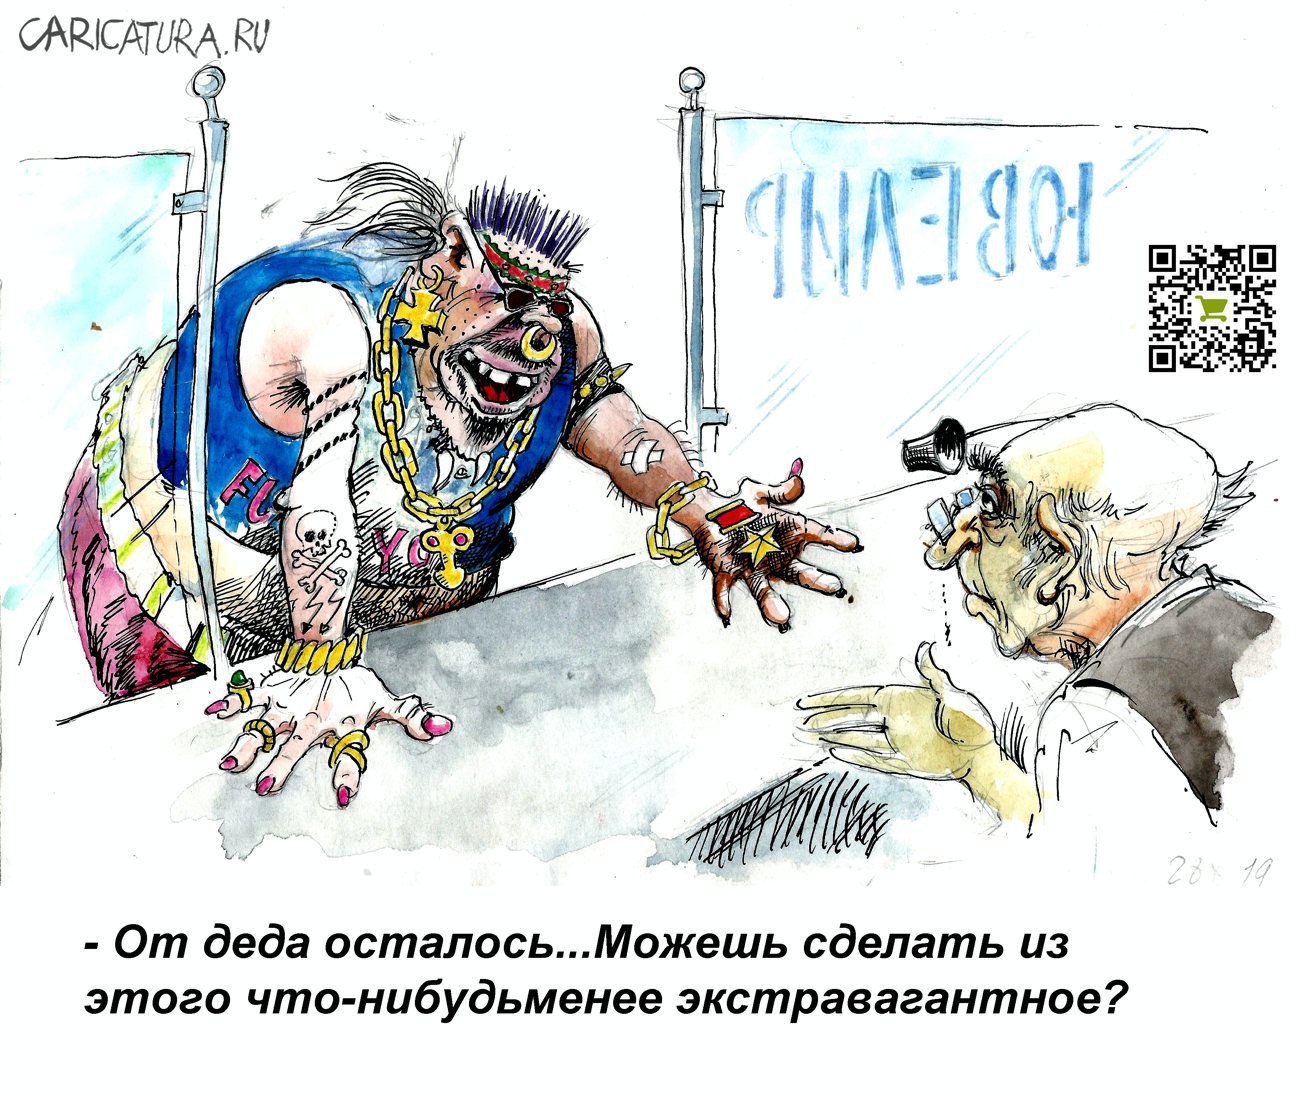 Карикатура "Звезда", Александр Шульпинов